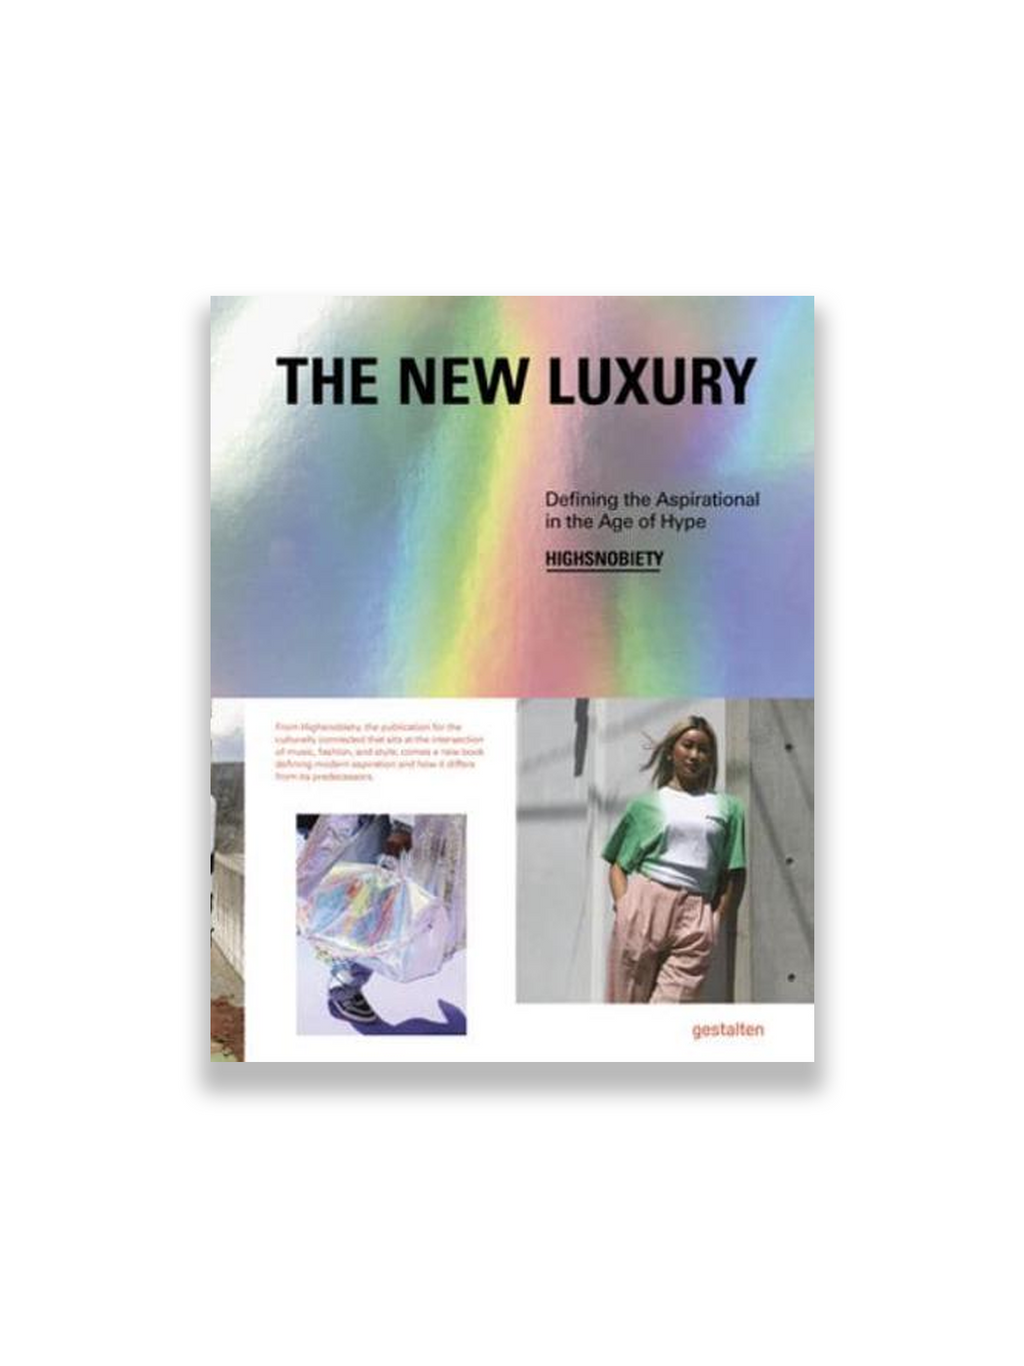 The New Luxury: Highsnobiety